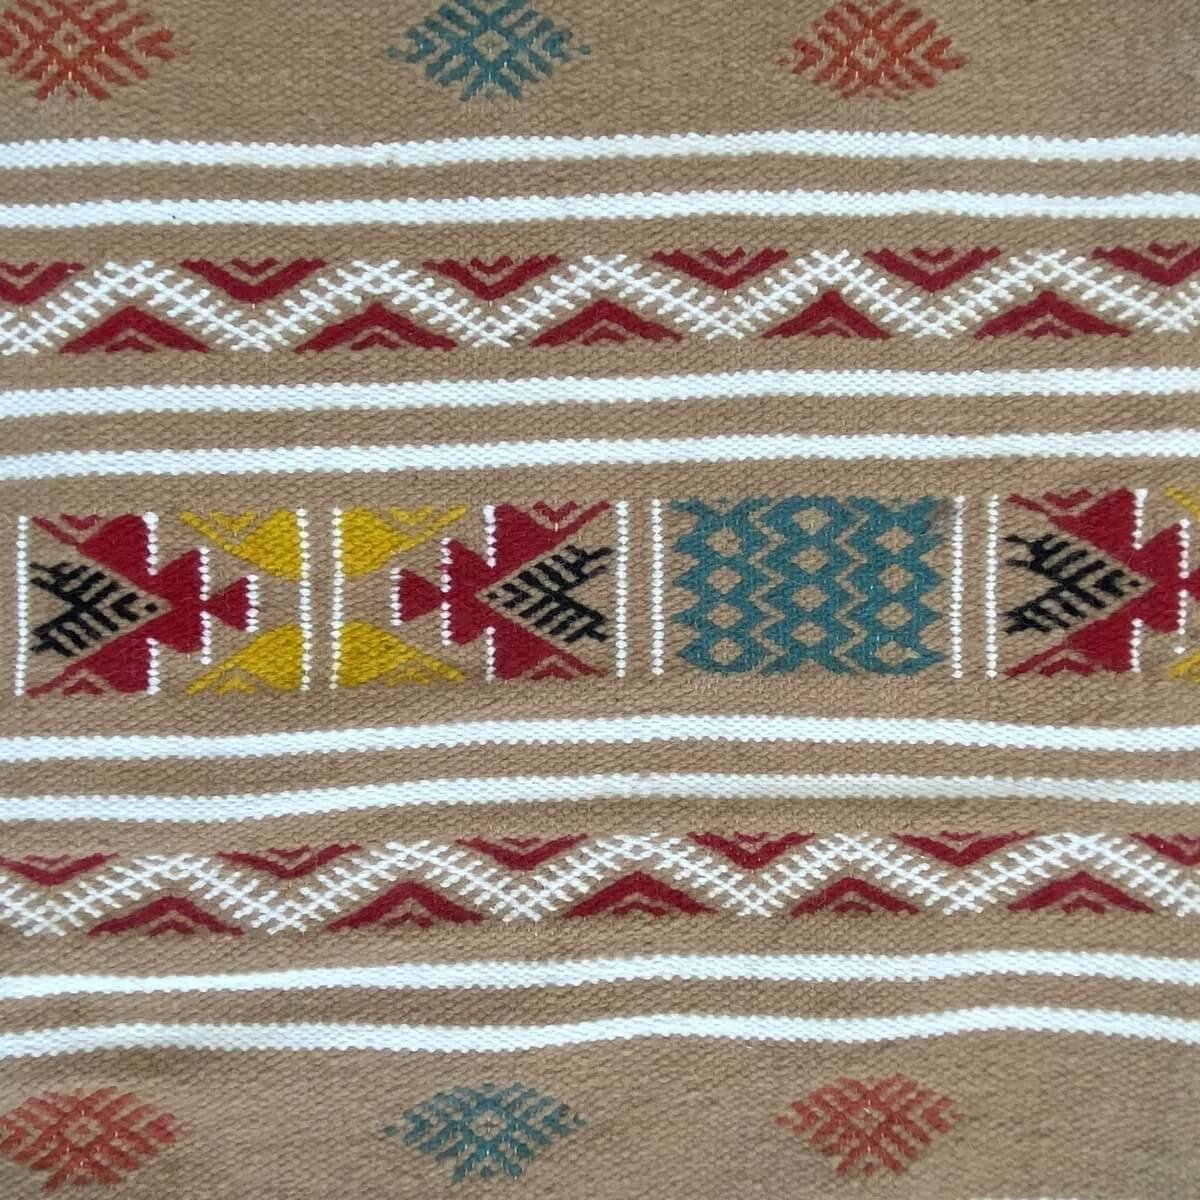 Berber tapijt Tapijt Kilim Azel 115x215 Beige/Veelkleurig (Handgeweven, Wol, Tunesië) Tunesisch kilimdeken, Marokkaanse stijl. R